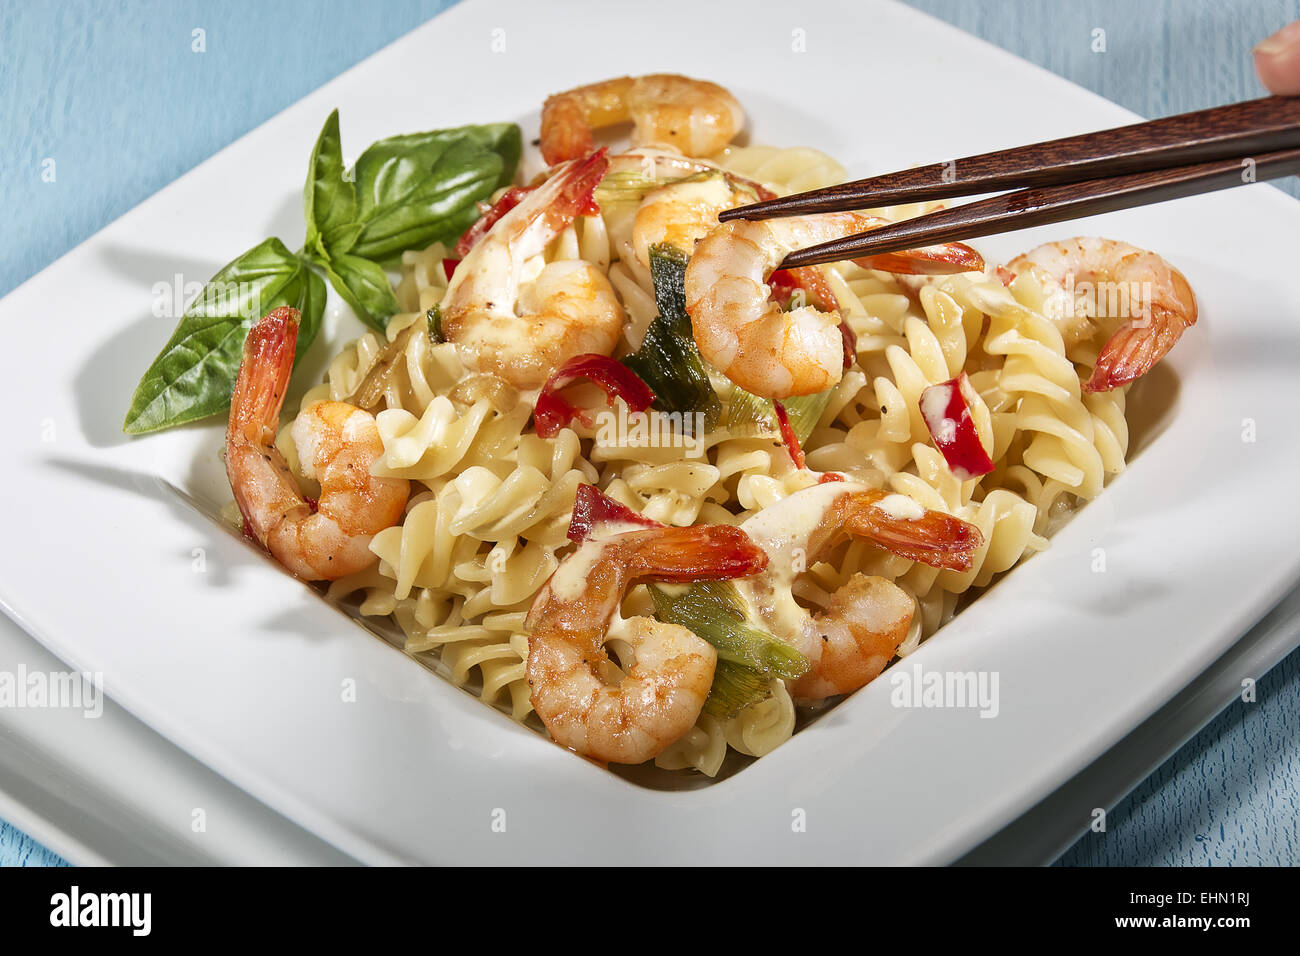 Shrimps and noodles Stock Photo